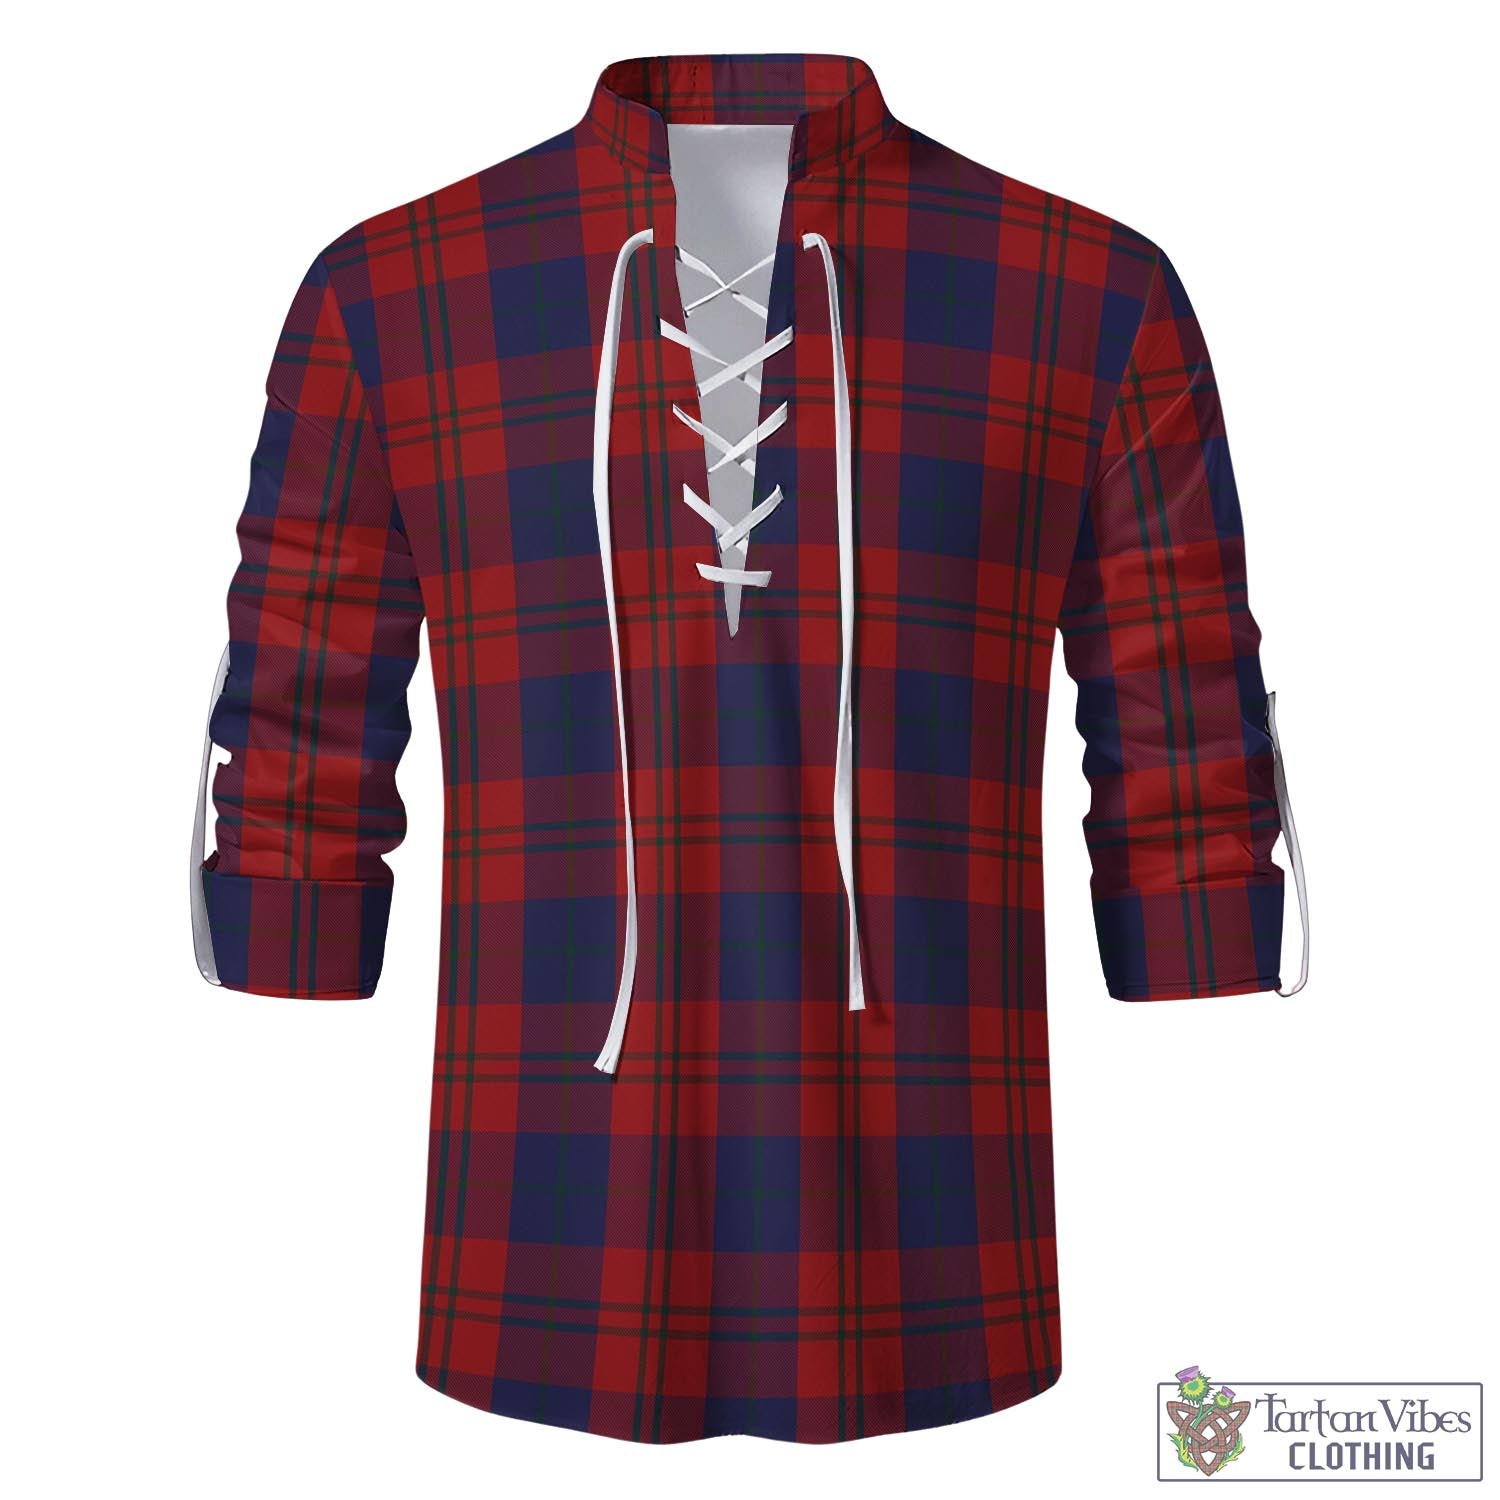 Tartan Vibes Clothing Wotherspoon Tartan Men's Scottish Traditional Jacobite Ghillie Kilt Shirt